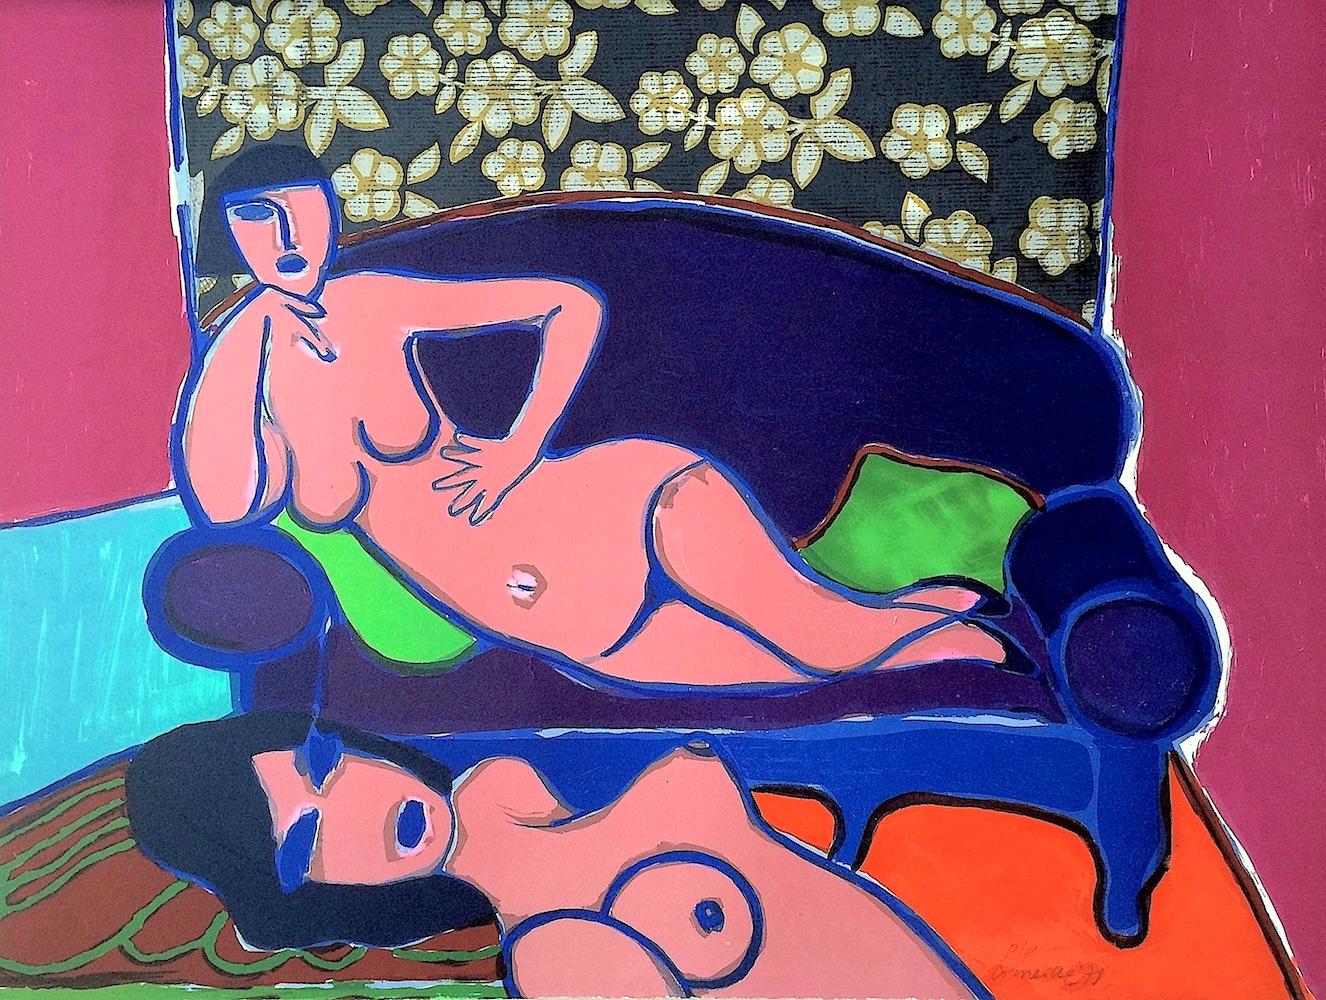 DEUX FEMMES NUES Signed Lithograph, Female Nudes, Blue Sofa, Floral Wallpaper - Contemporary Print by Corneille